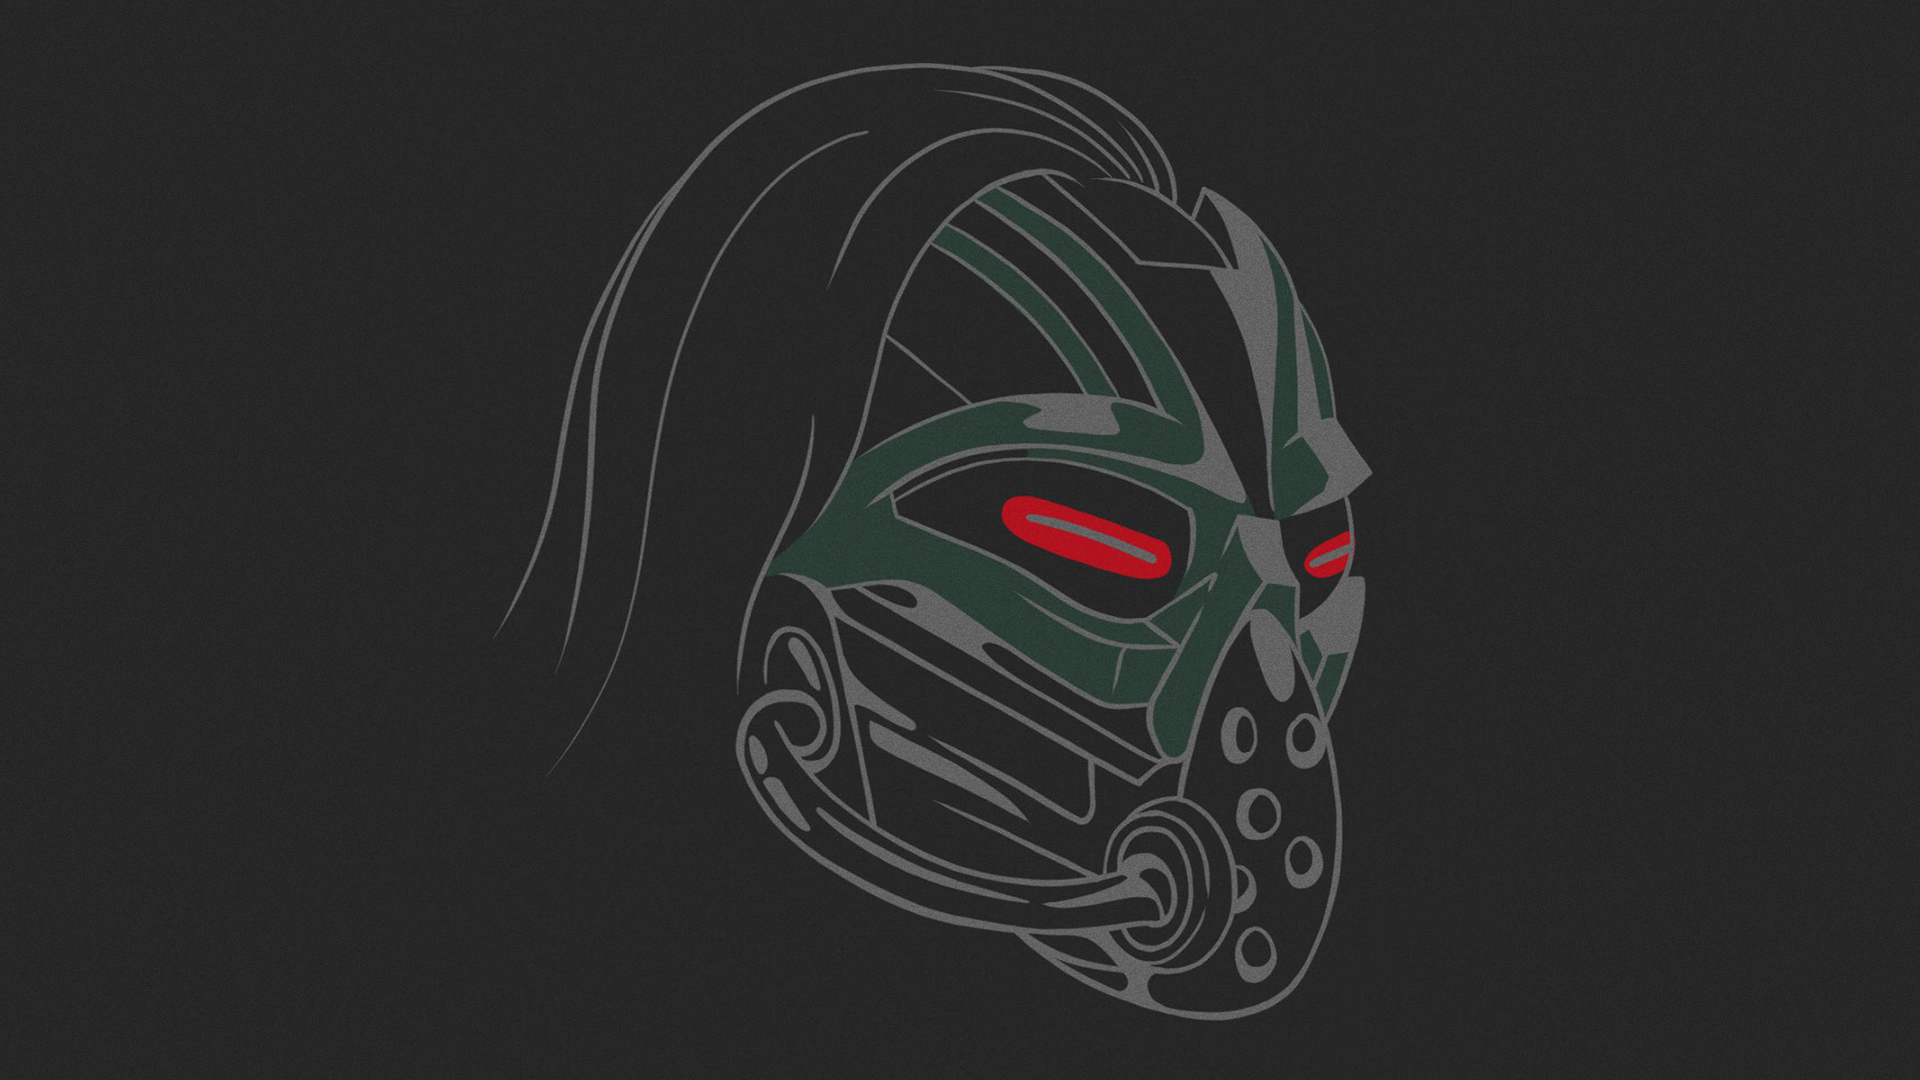 Mortal Kombat background - Kabal's head